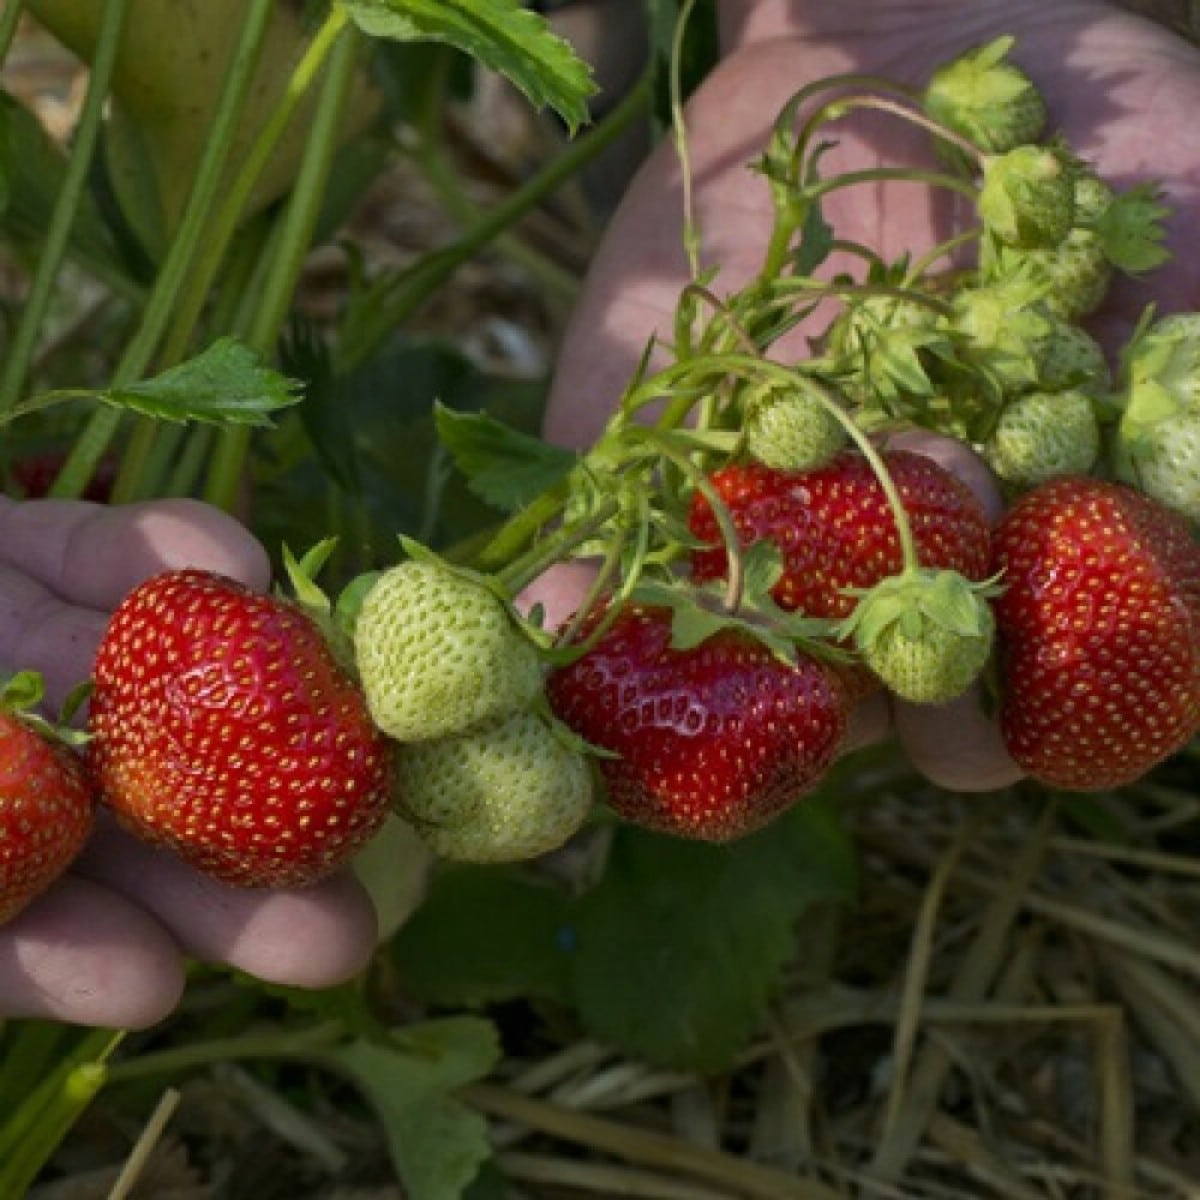 Flavorfest strawberries held in hand.